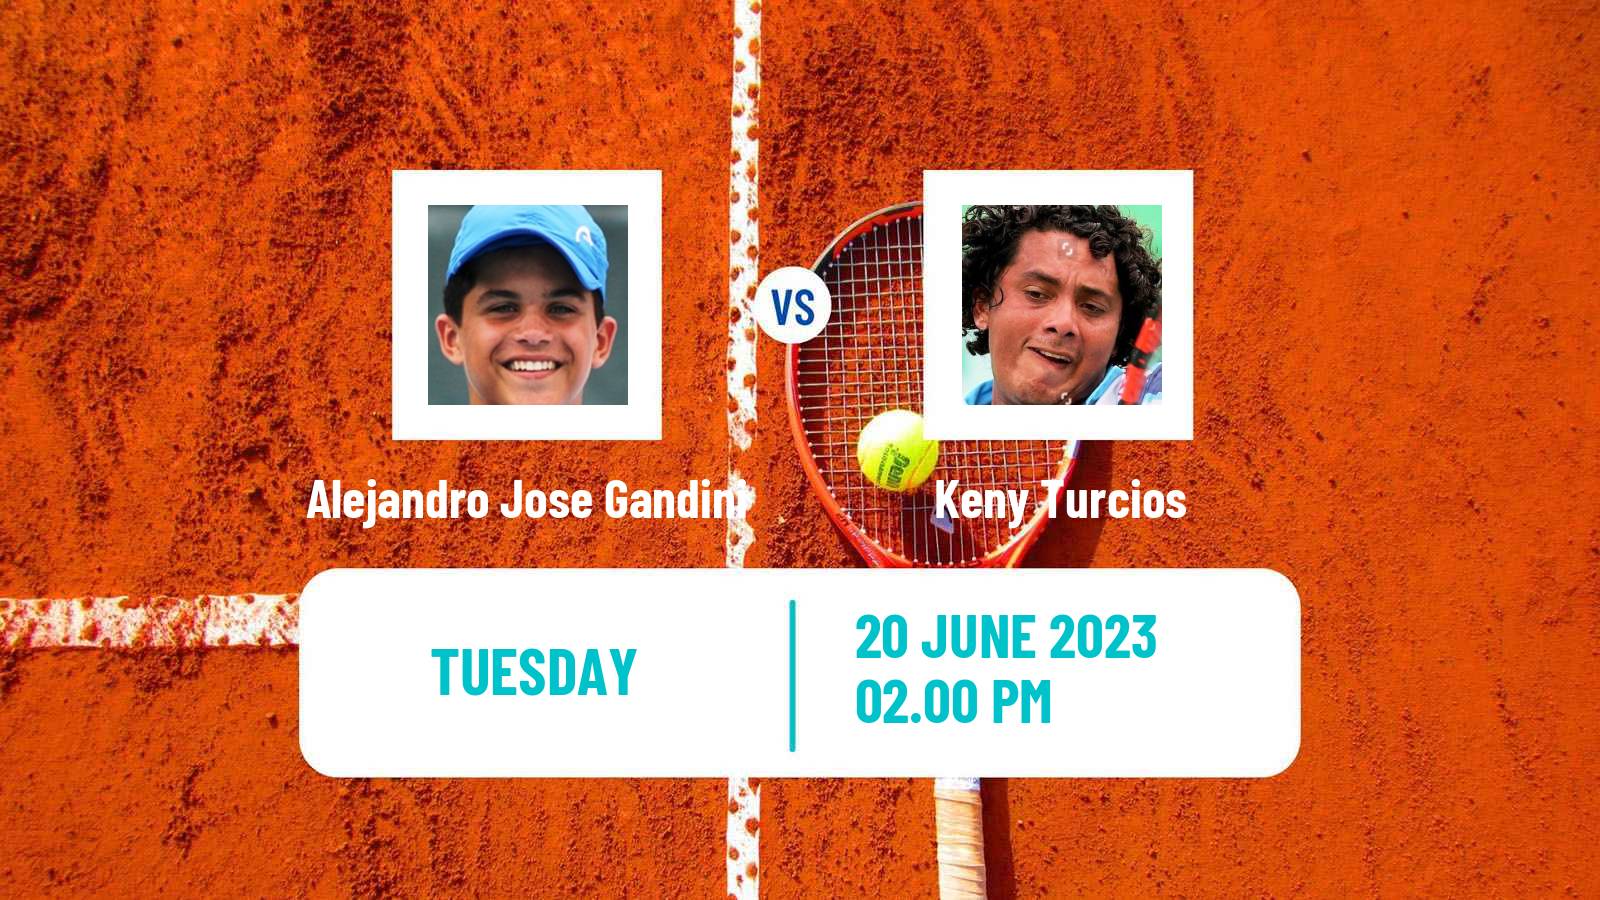 Tennis Davis Cup Group III Alejandro Jose Gandini - Keny Turcios